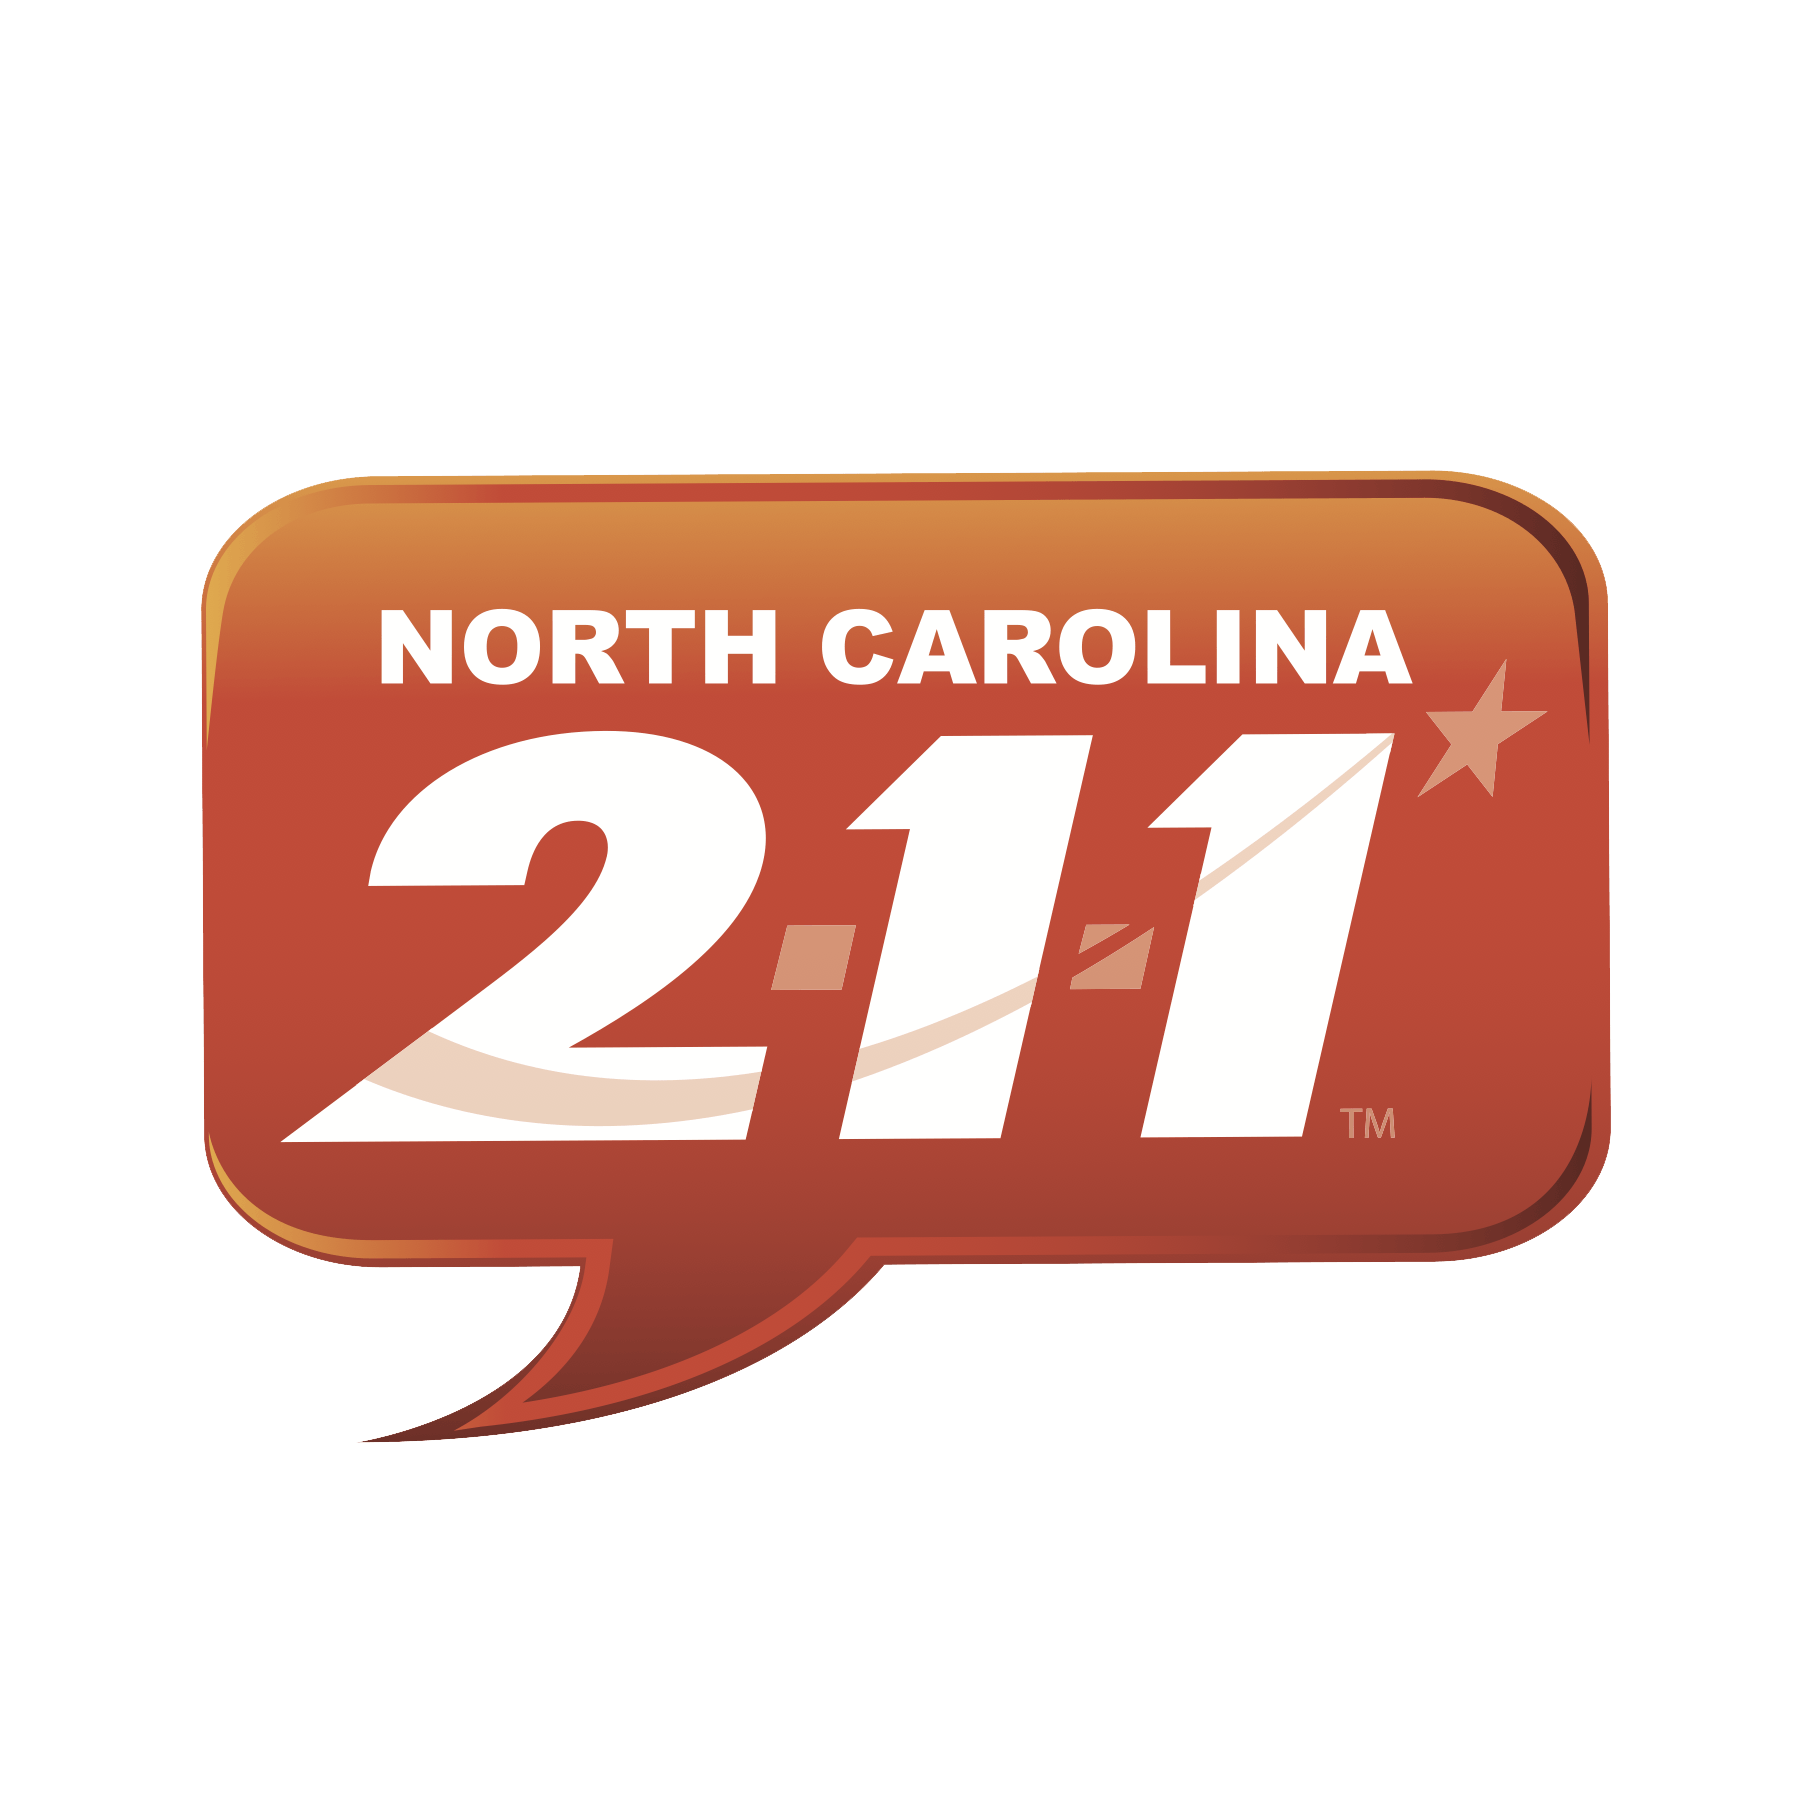 NC Logo - North Carolina 2 1 1